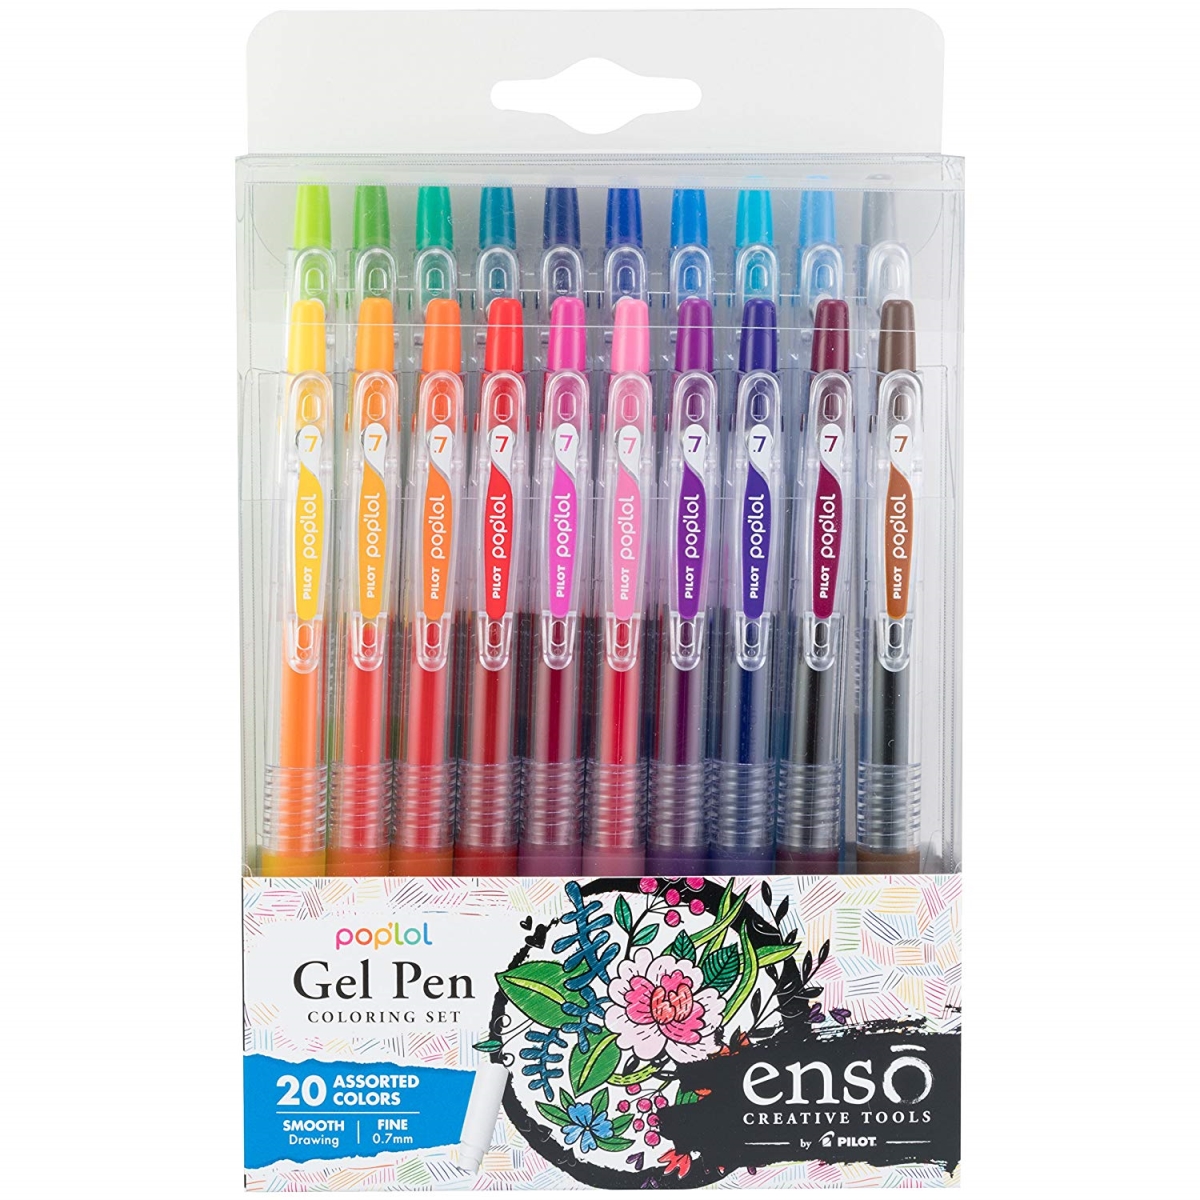 17075 Enso Pop Lol Gel Pen Coloring Set, Assorted Color